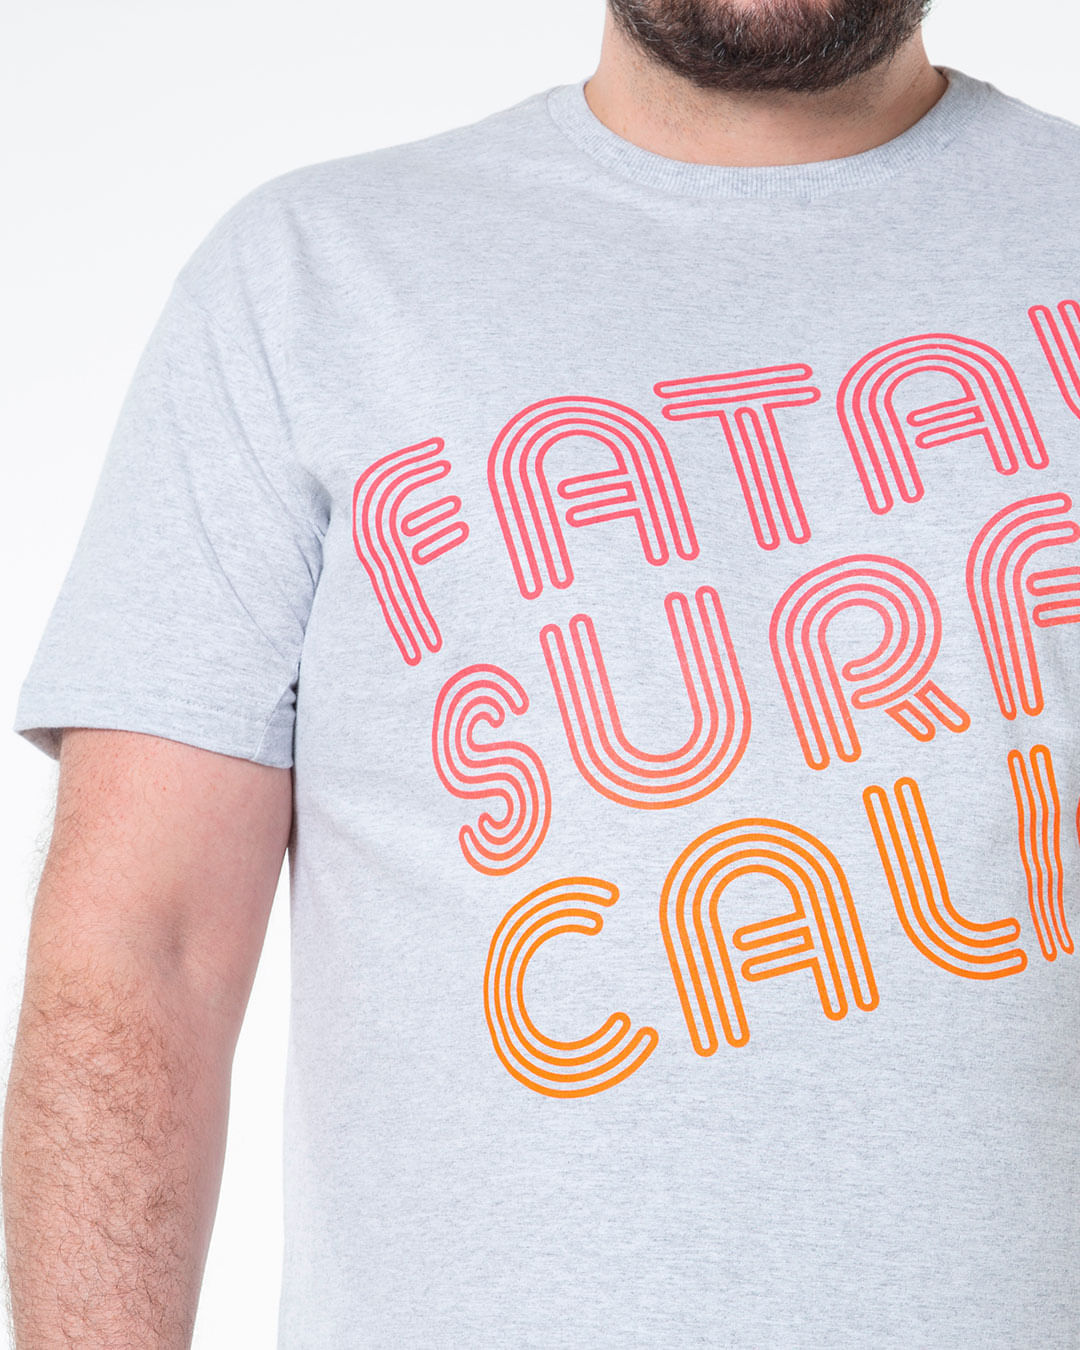 Camiseta-Masculina-Plus-Size-Estampada-Surf-Calif-Fatal-Cinza